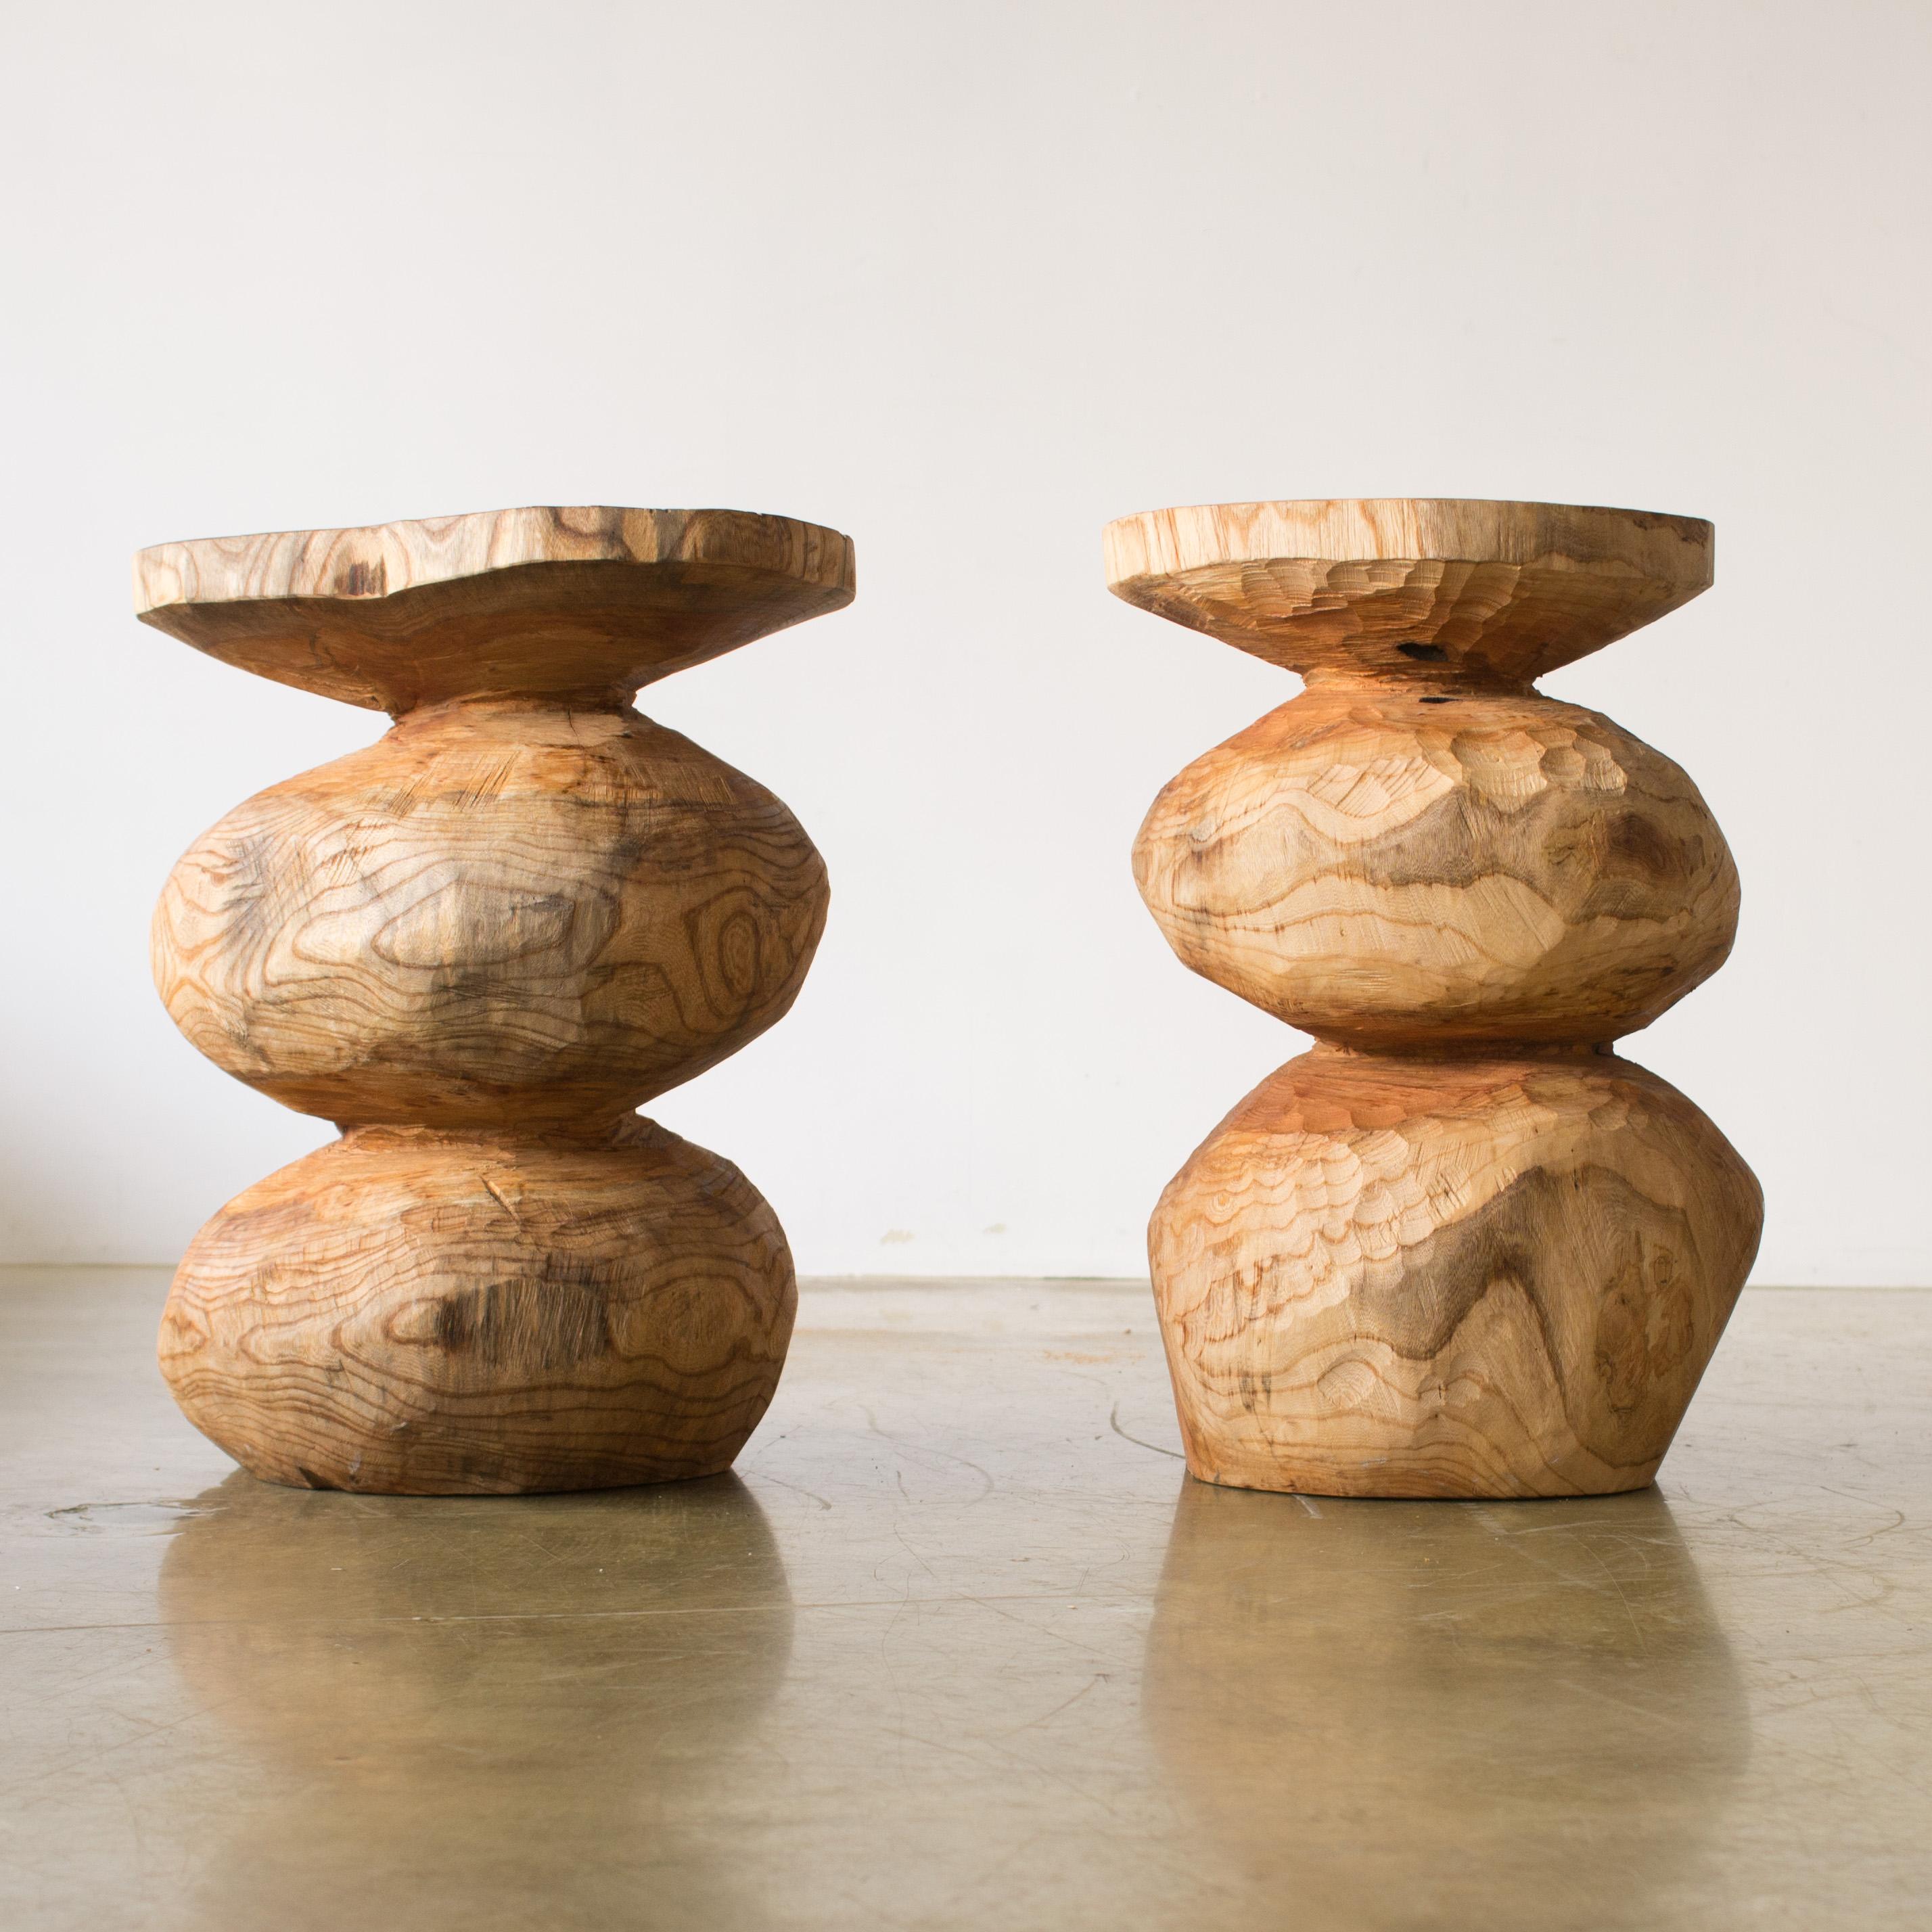 Contemporary Hiroyuki Nishimura Furniture Sculptural Wood Stool10-09 Tribal Glamping For Sale